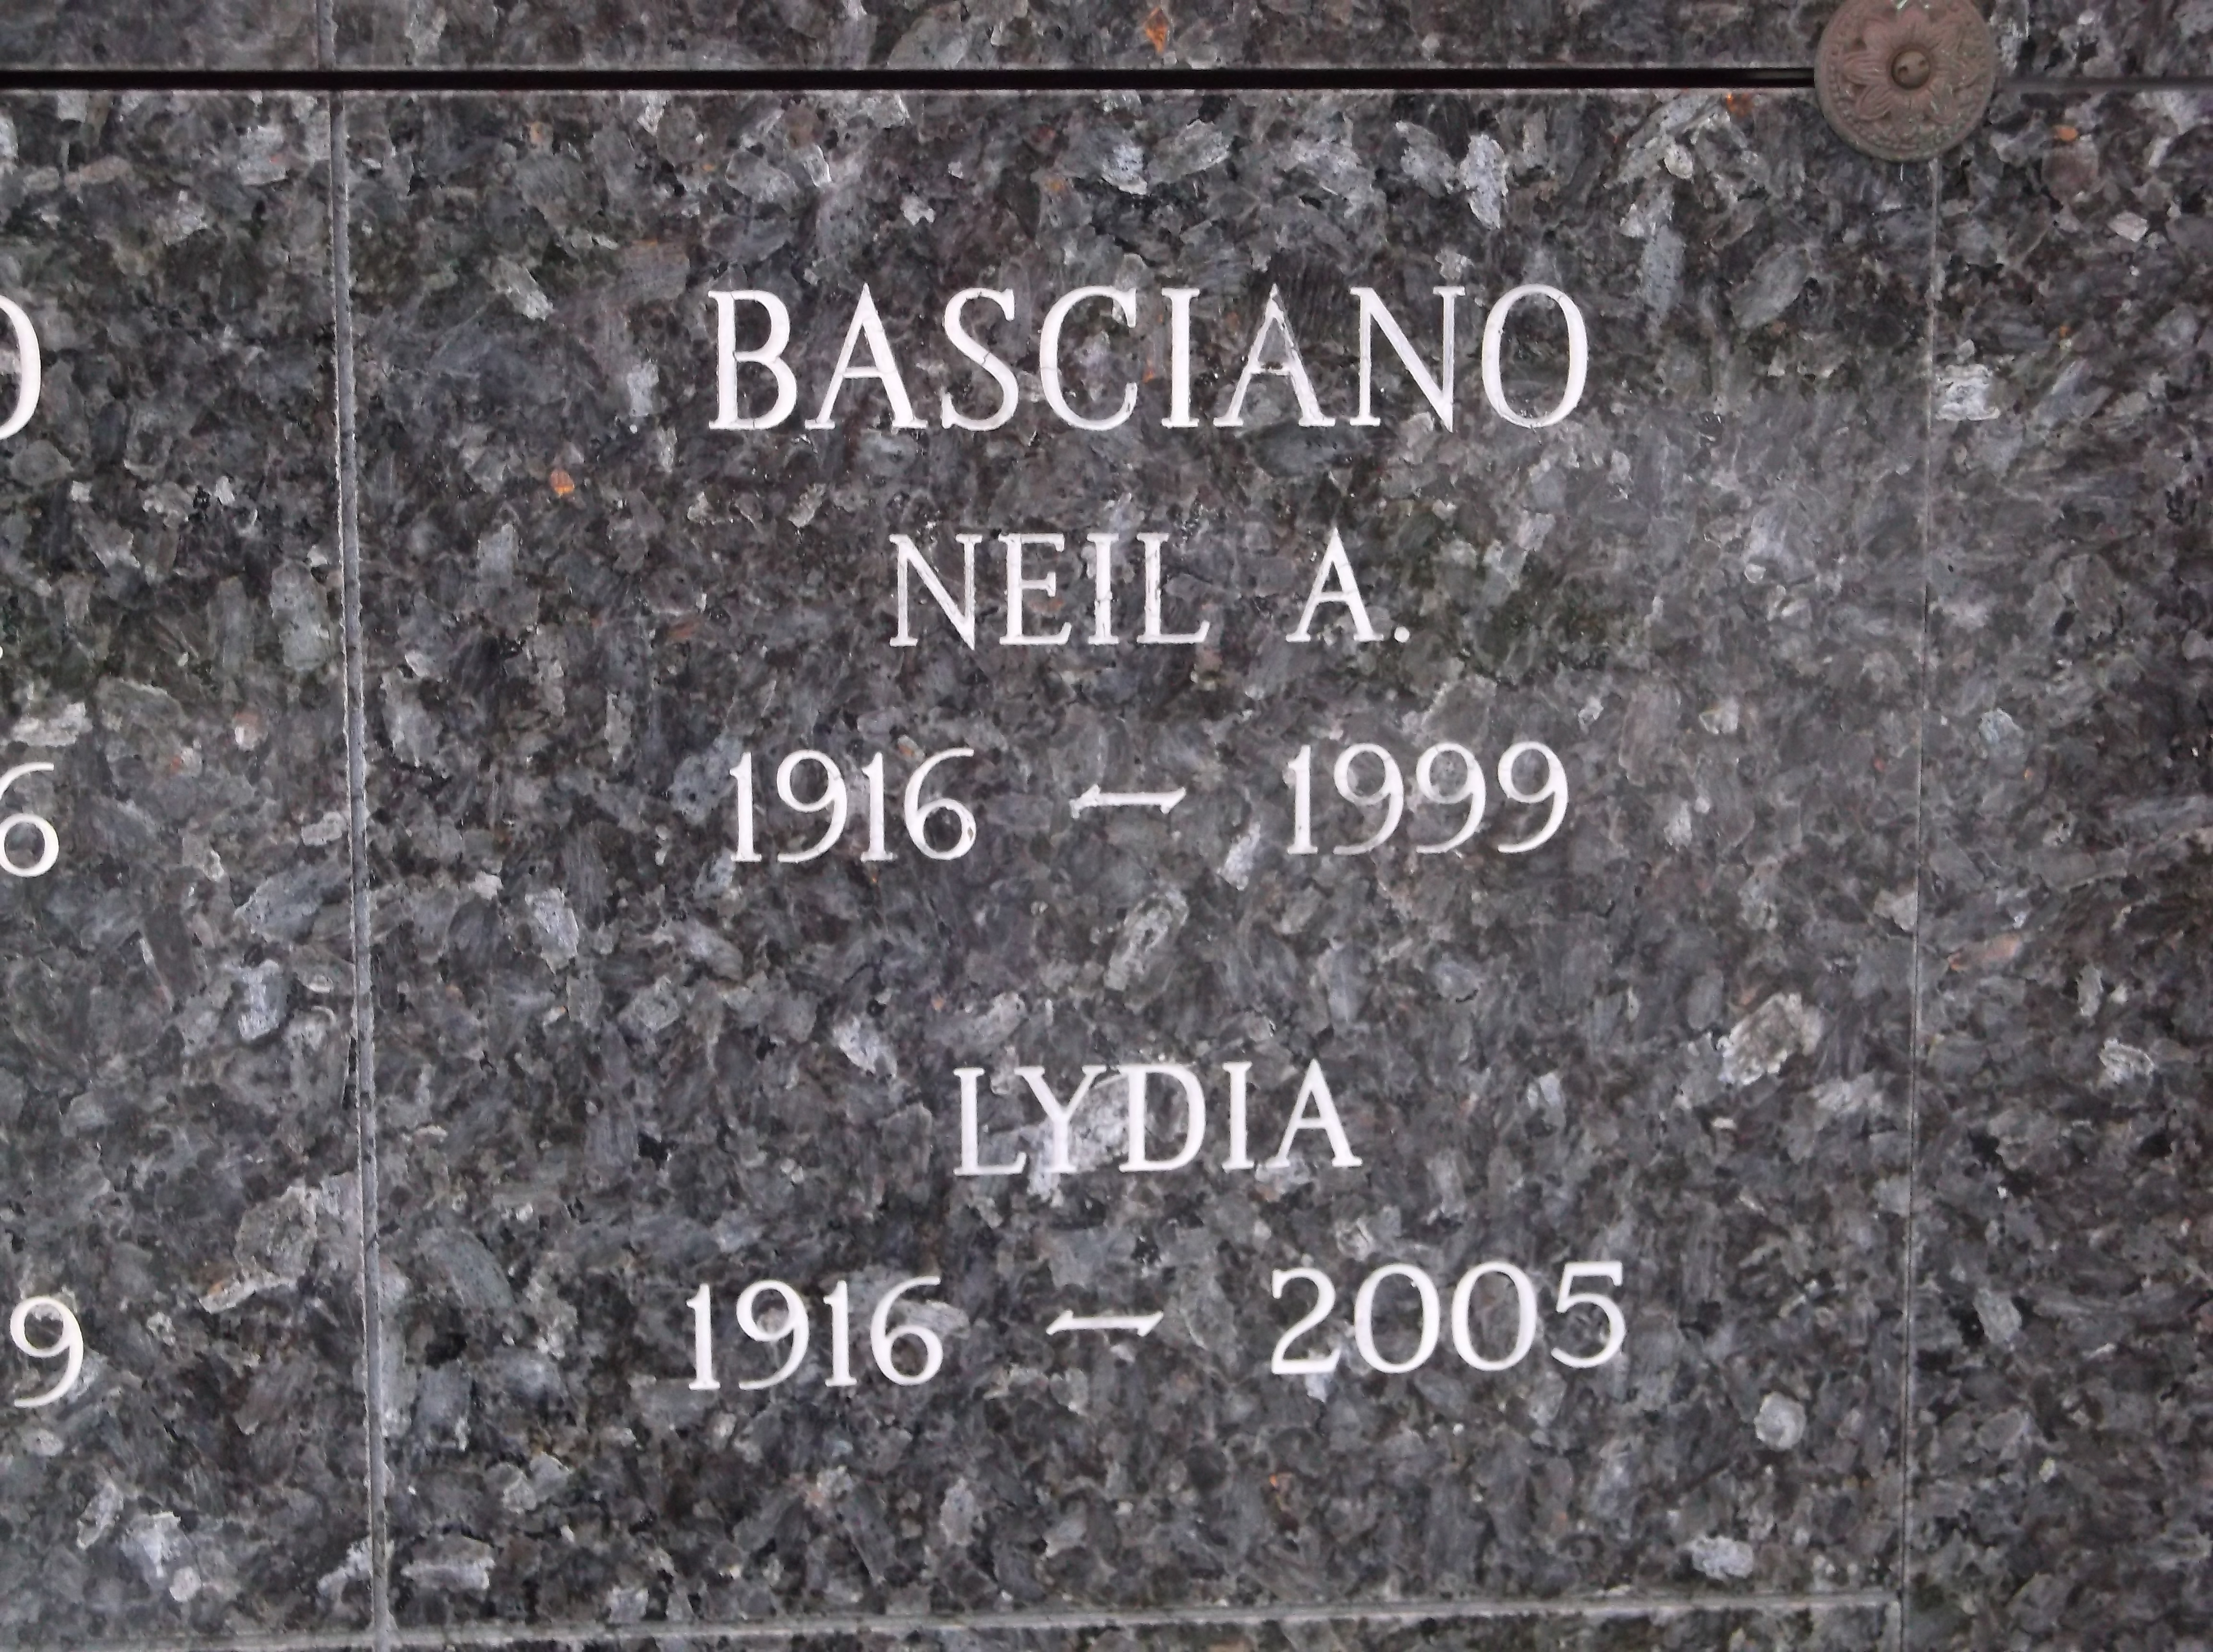 Neil A Basciano